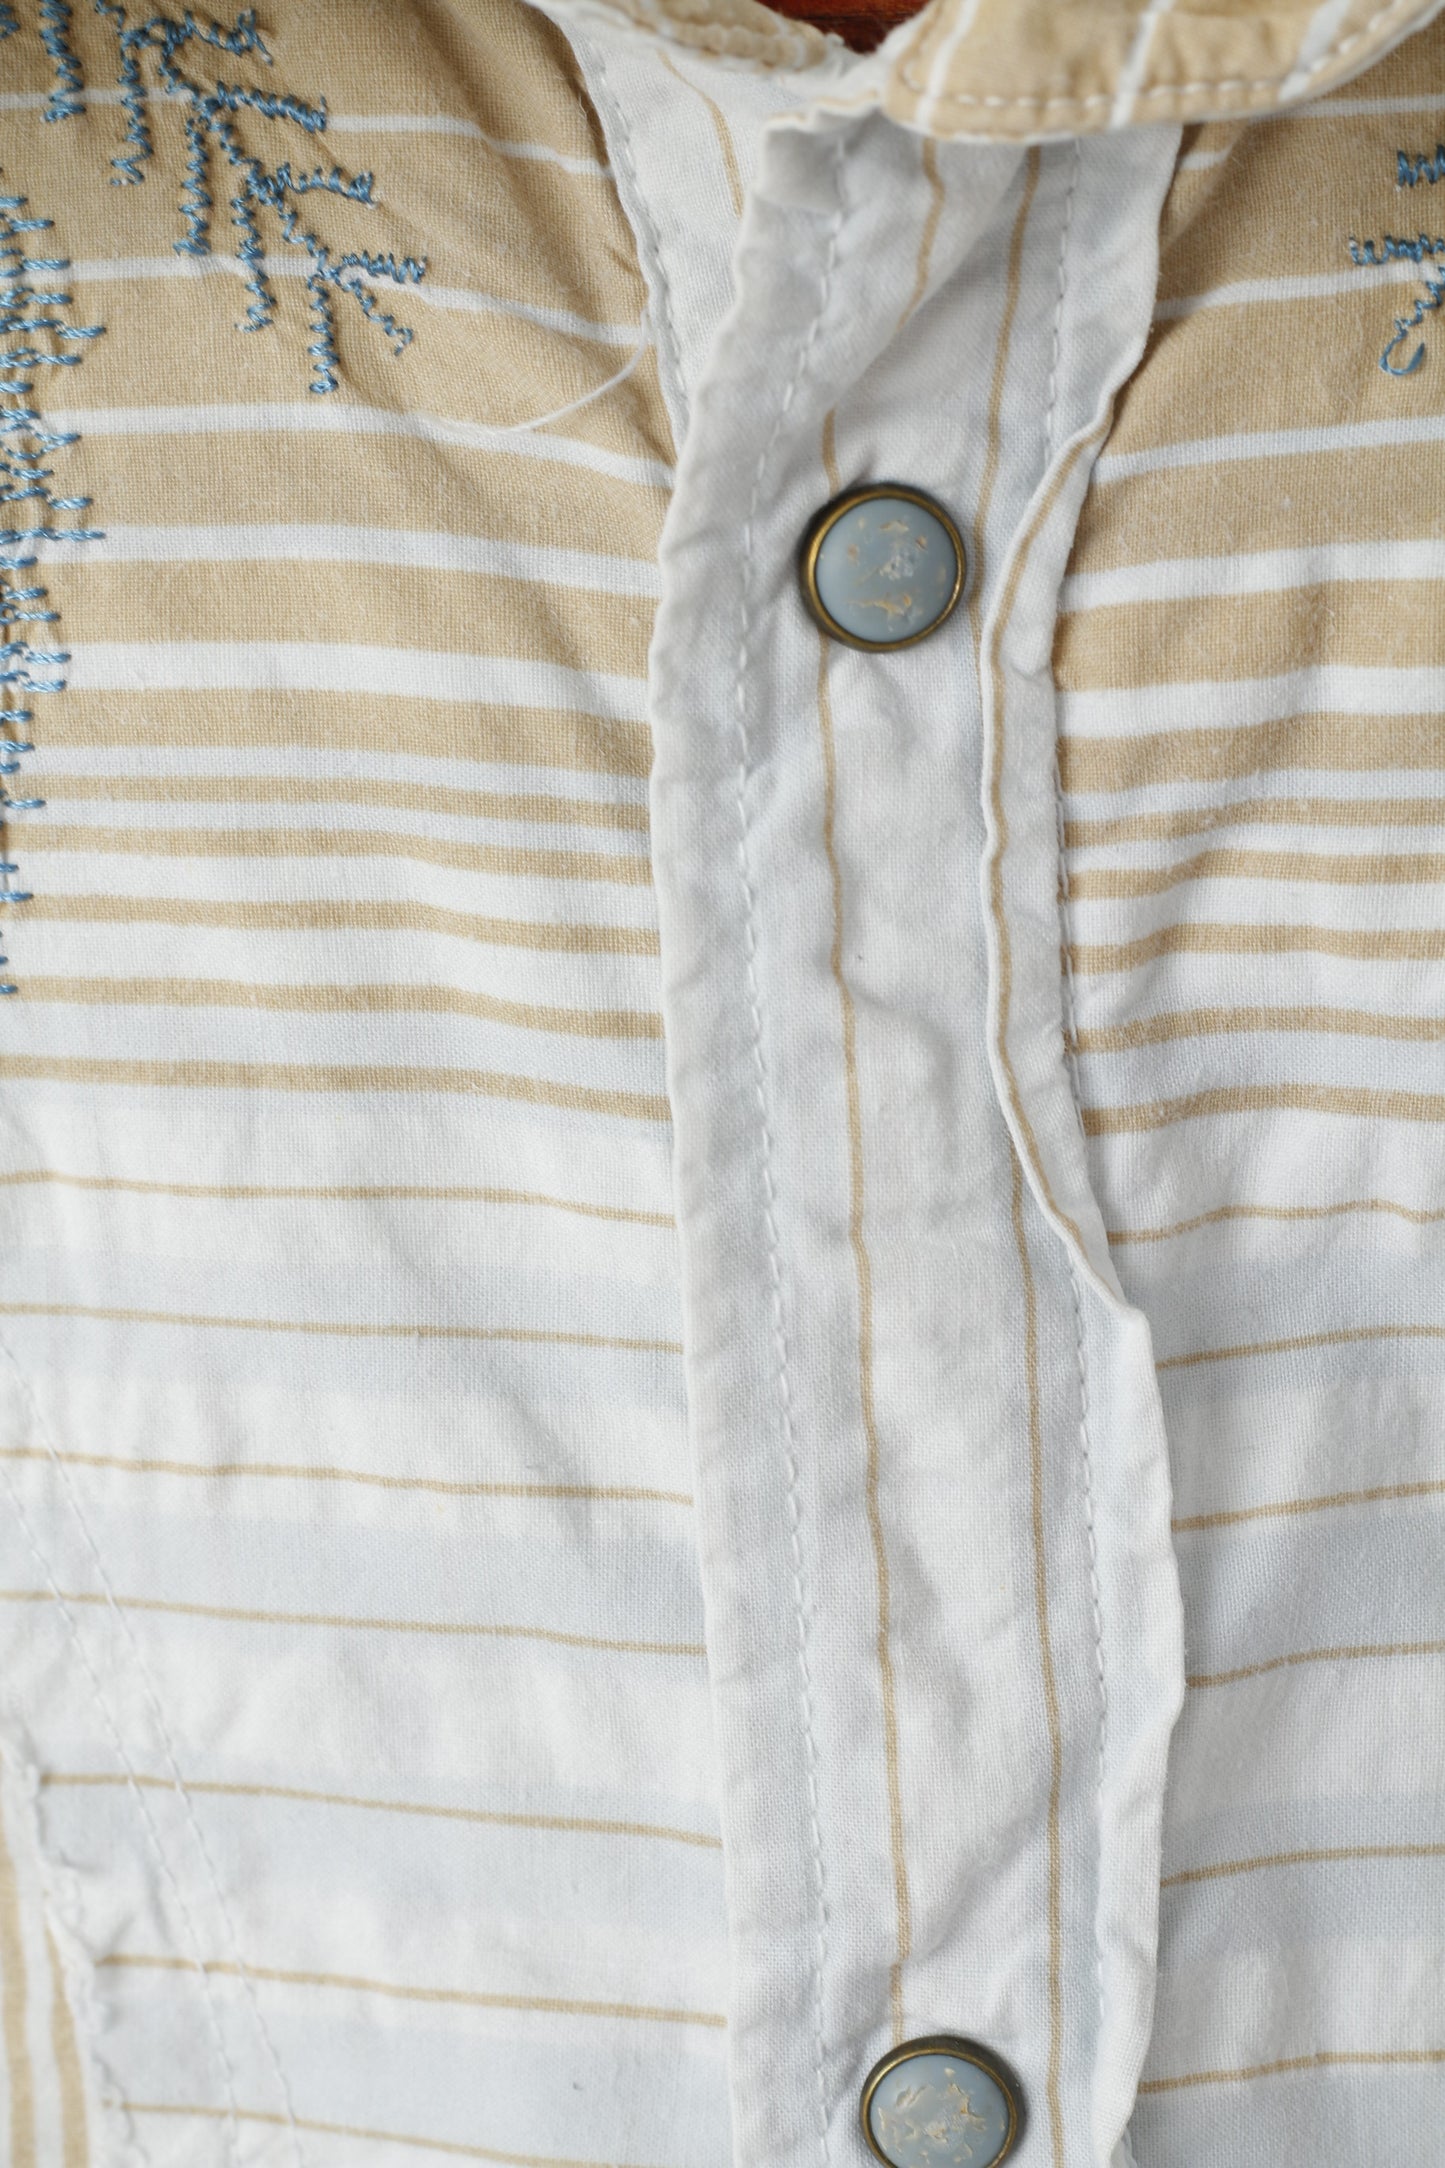 Camicia casual da uomo Diesel L. Top western con bottoni automatici ricamati in cotone a righe blu beige